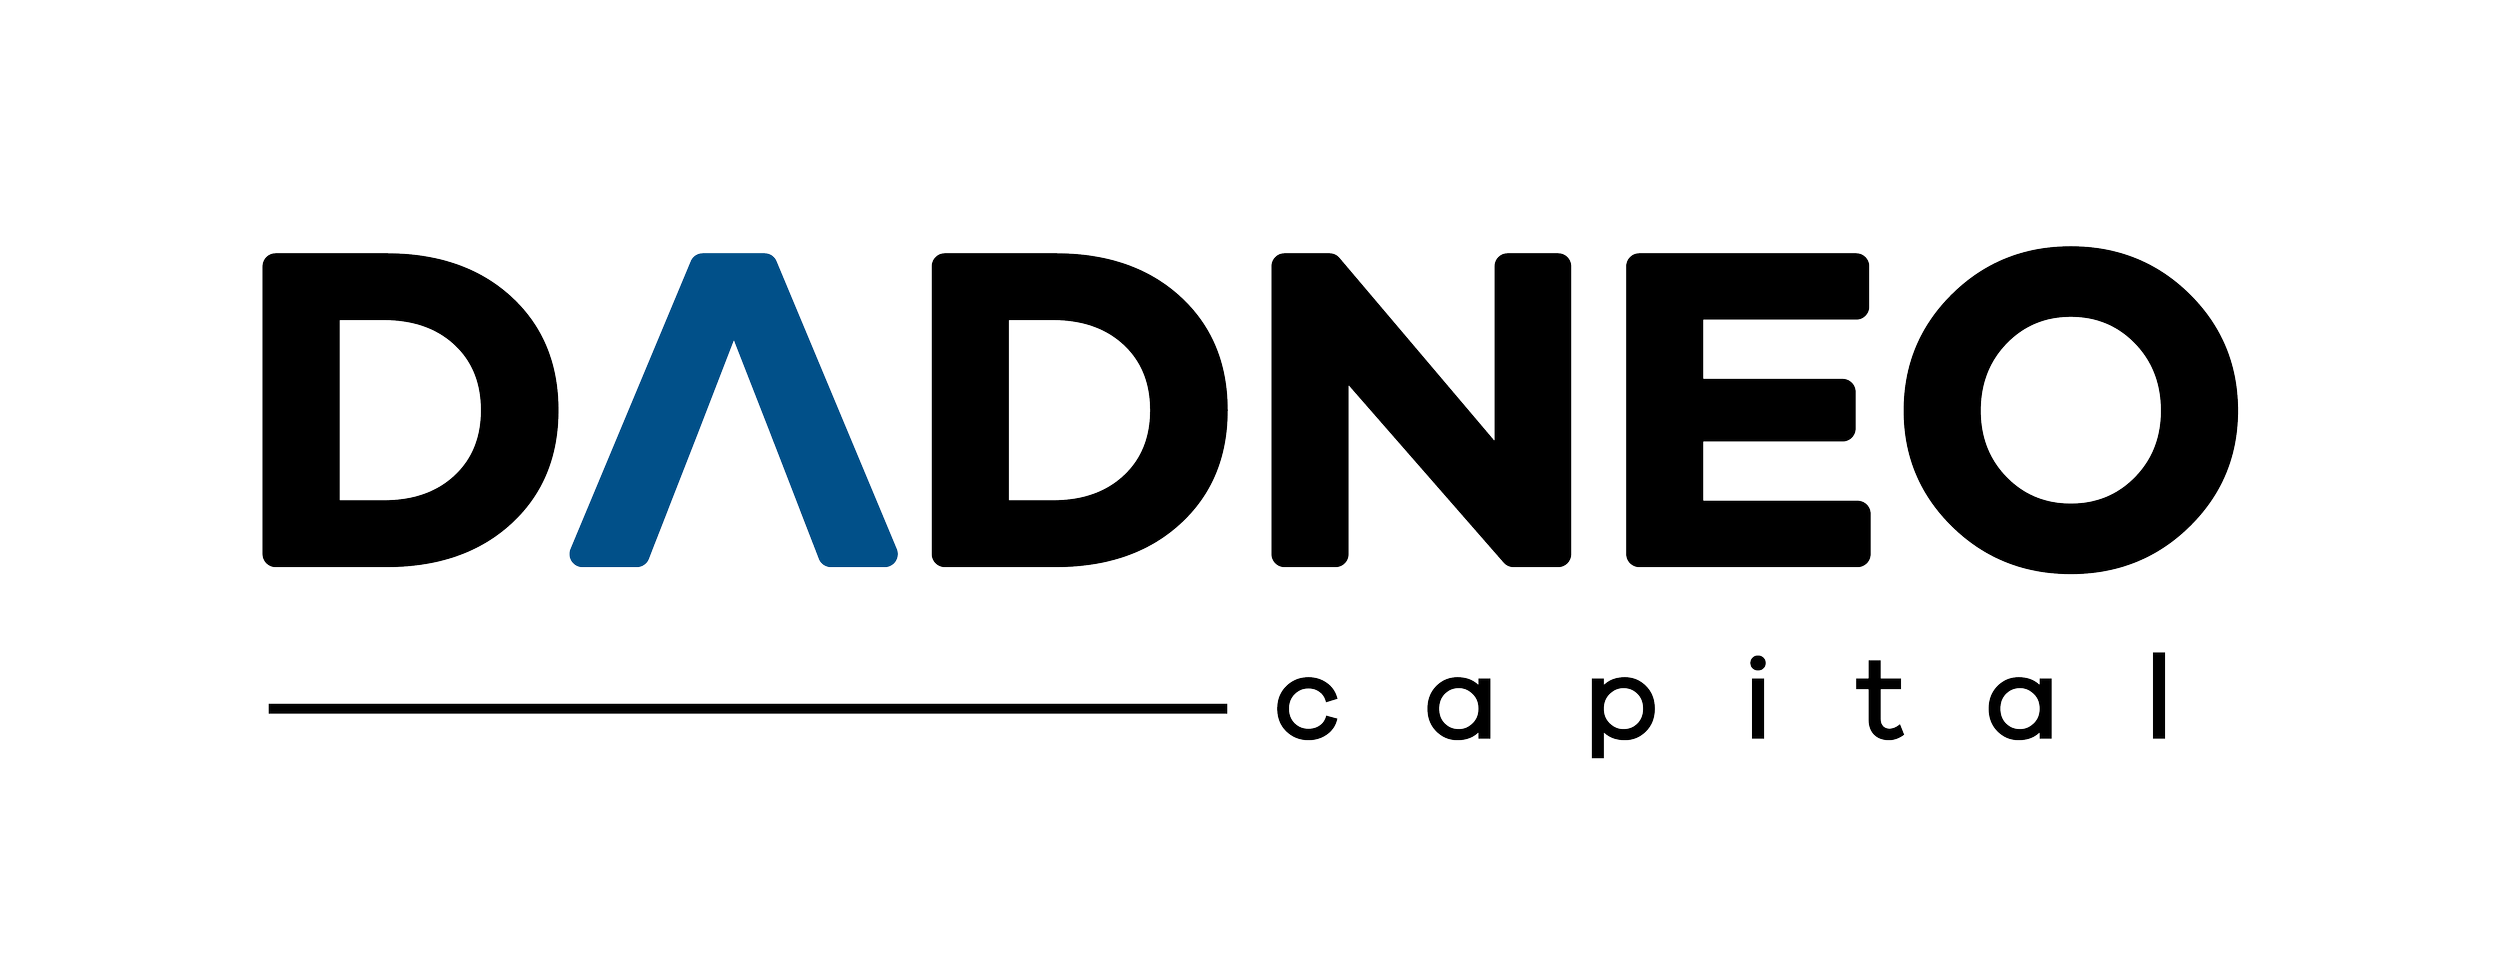 Dadneo logo.png